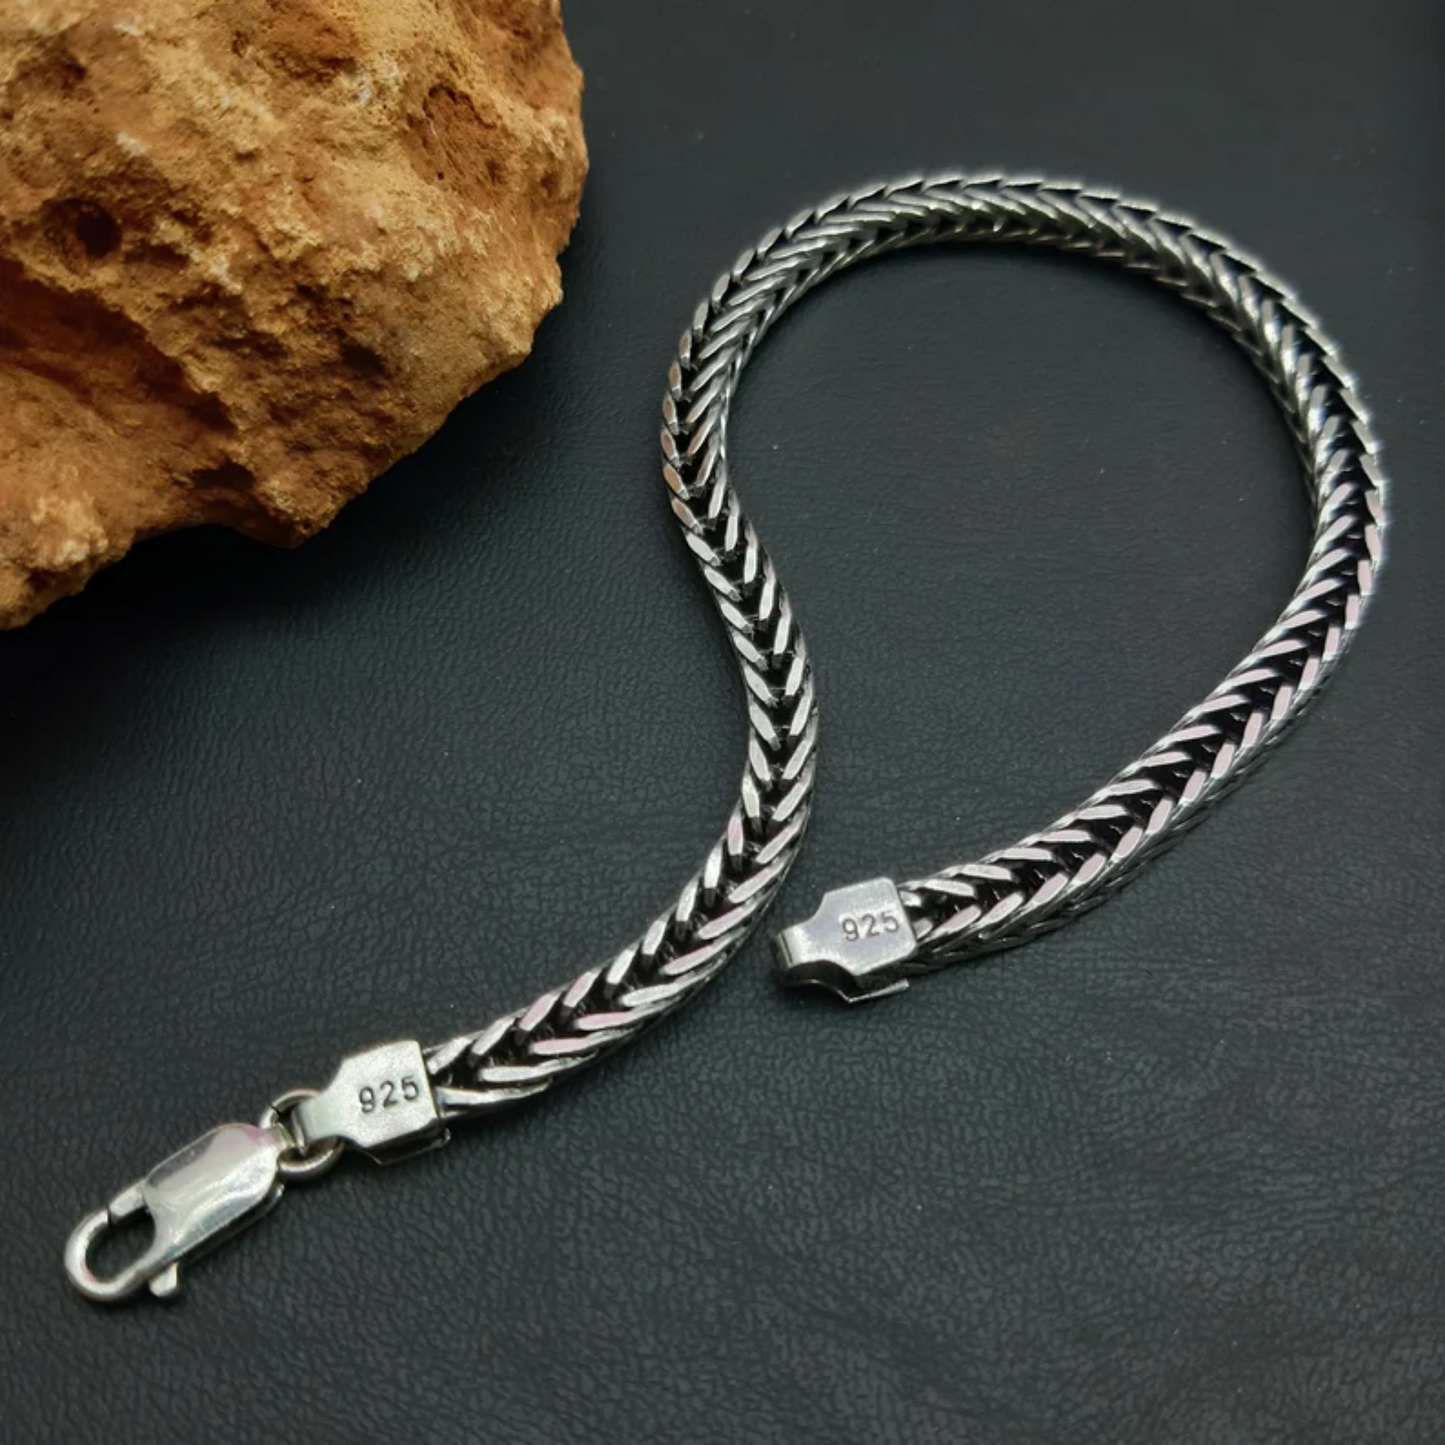 Foxtail 925 Sterling Silver Bracelet, Viking Chain,Oxidized Chain Bracelet.